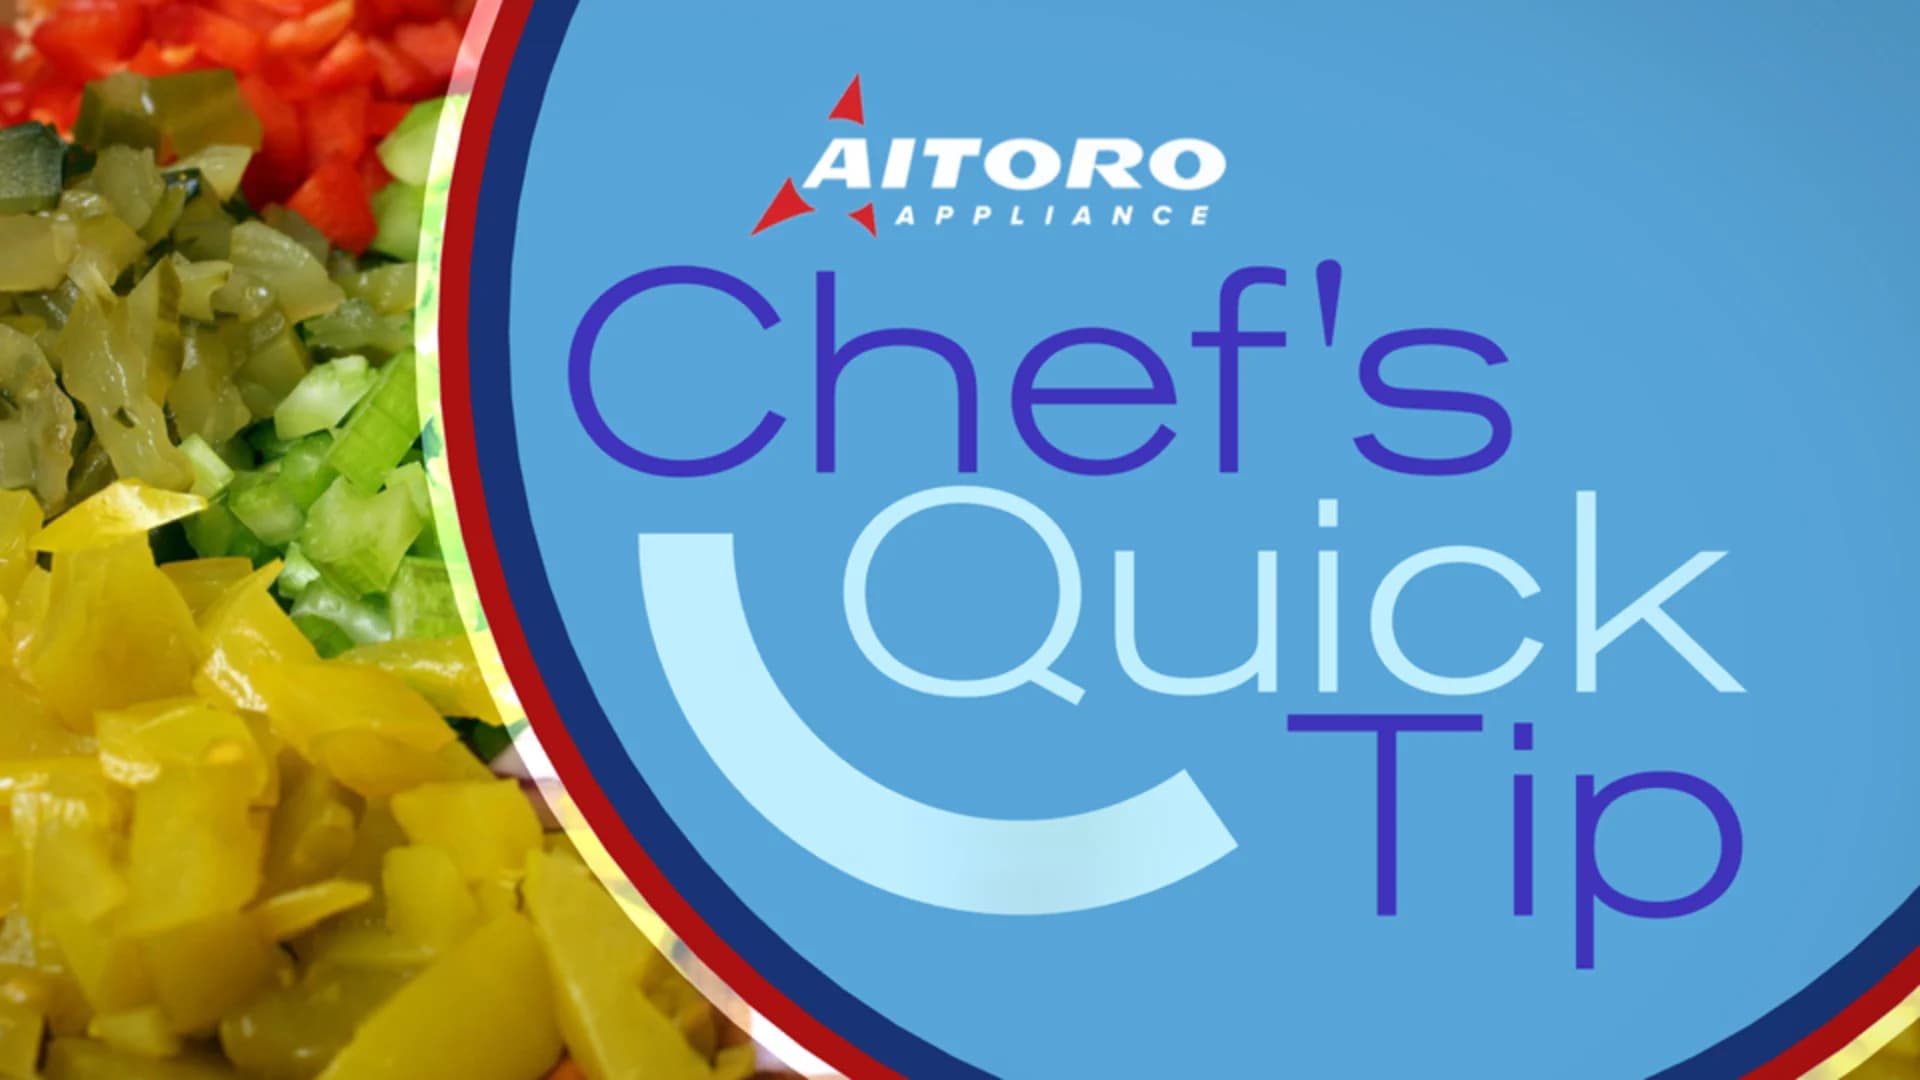 PHOTOS: Chef's Quick Tip